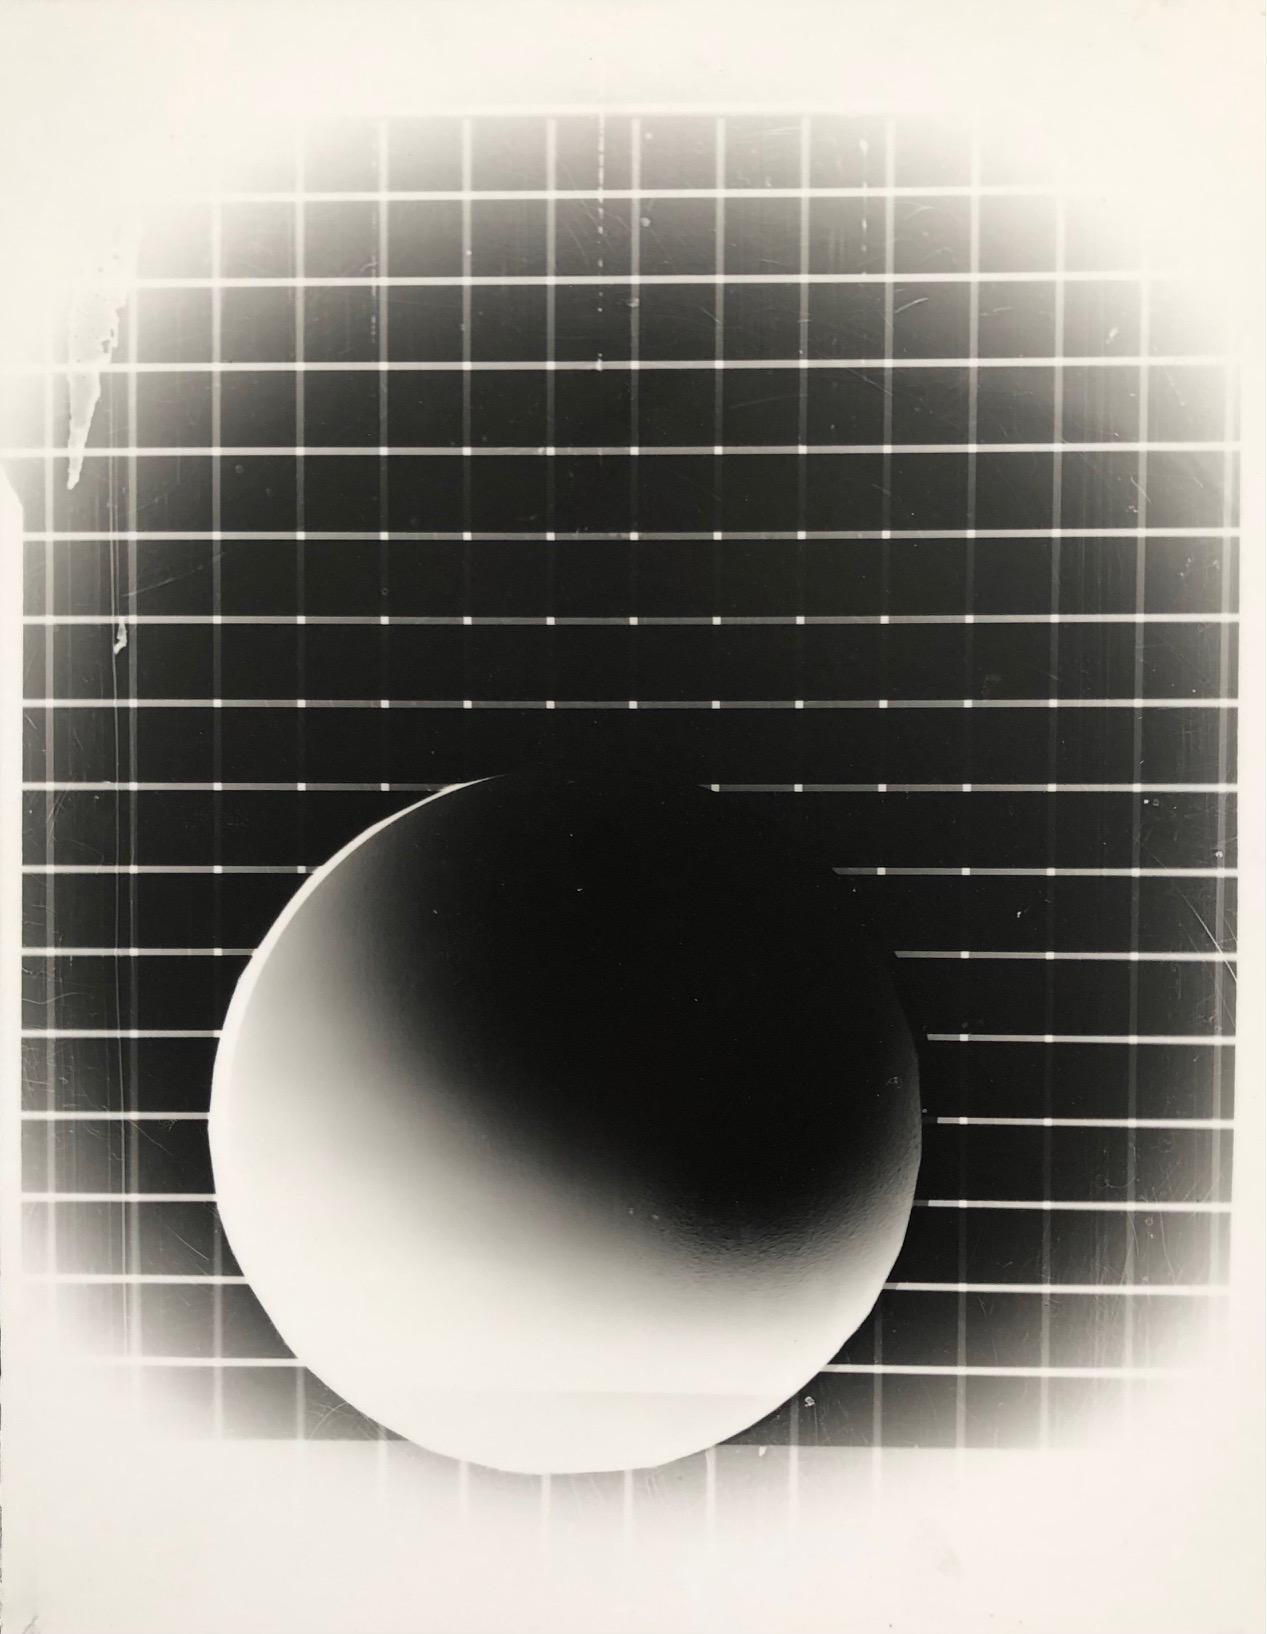 Juan Fernandez, Sphere 3 (Negative), 2022, Laminated silver gelatin print mounted on masonite, 14” x 11” x 1”